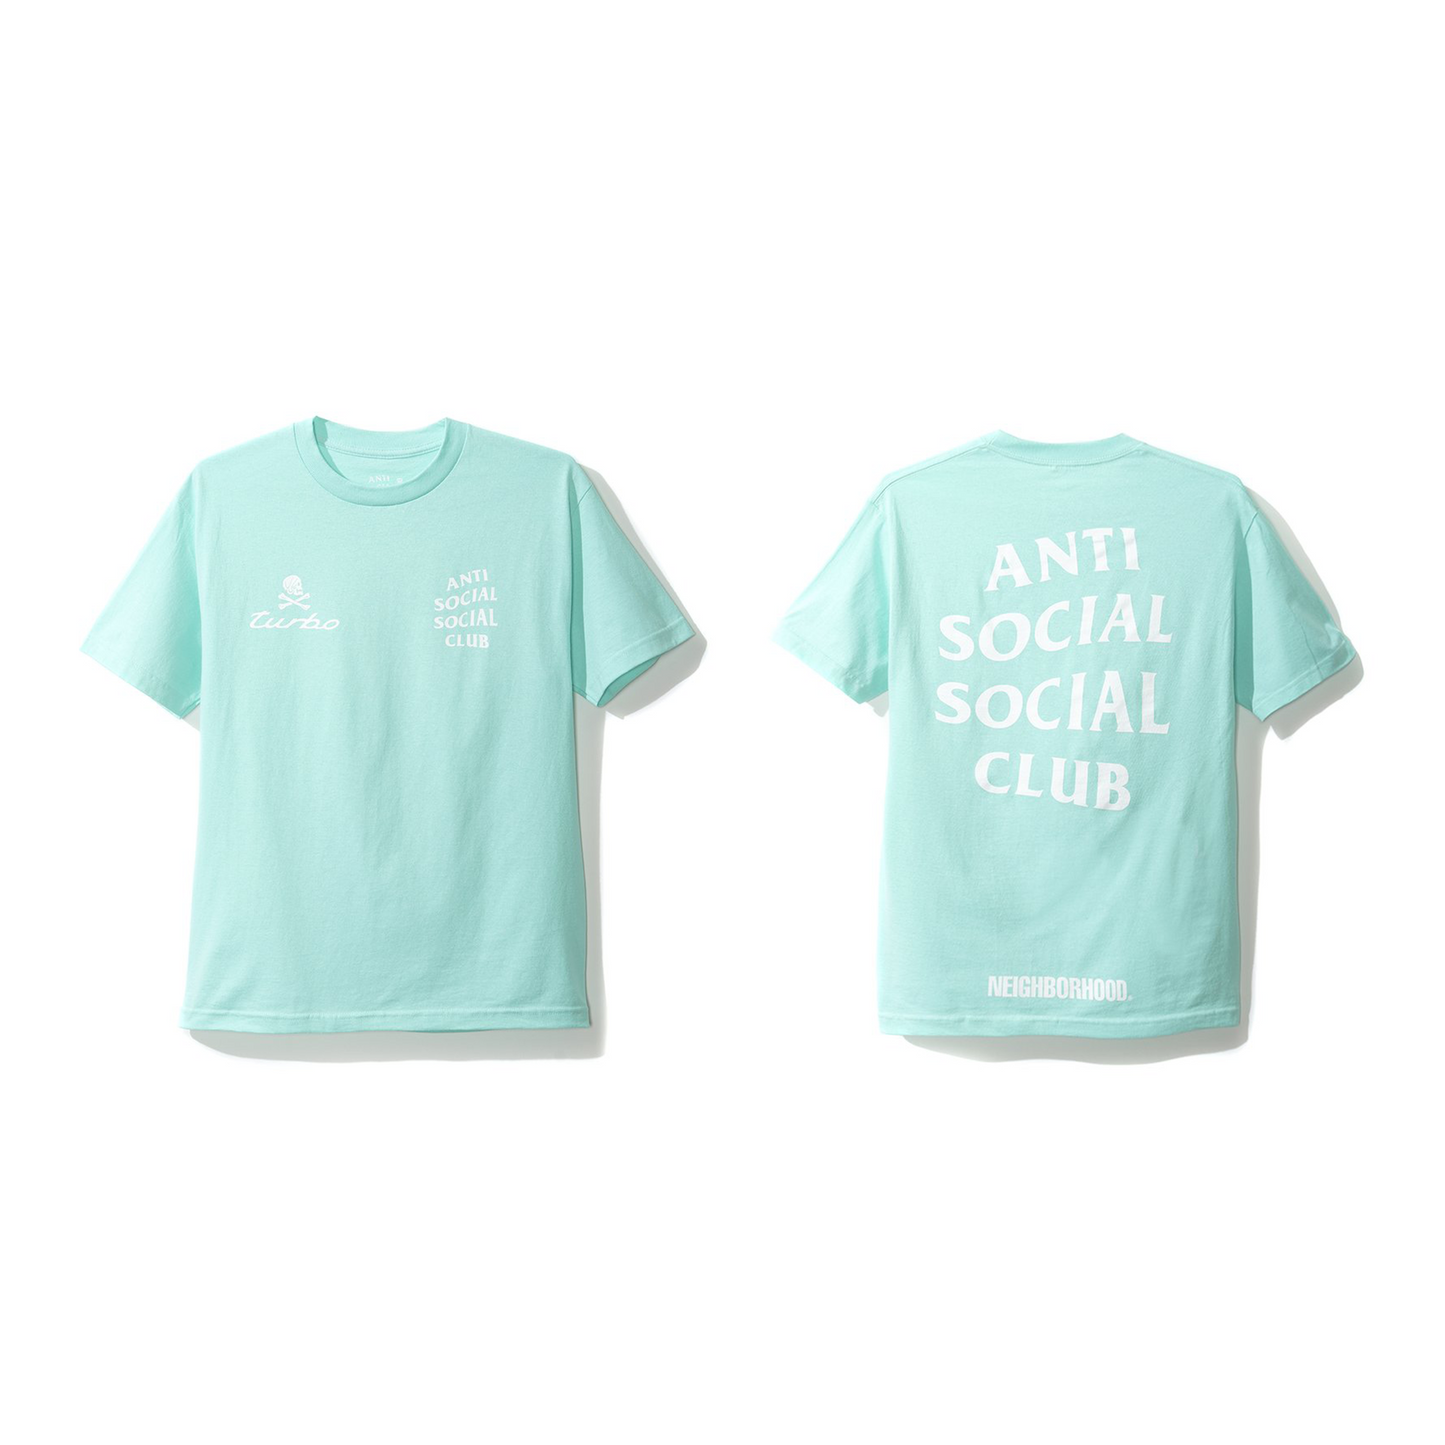 ASSC Anti Social Social Club 911 Turbo Teal Shirt